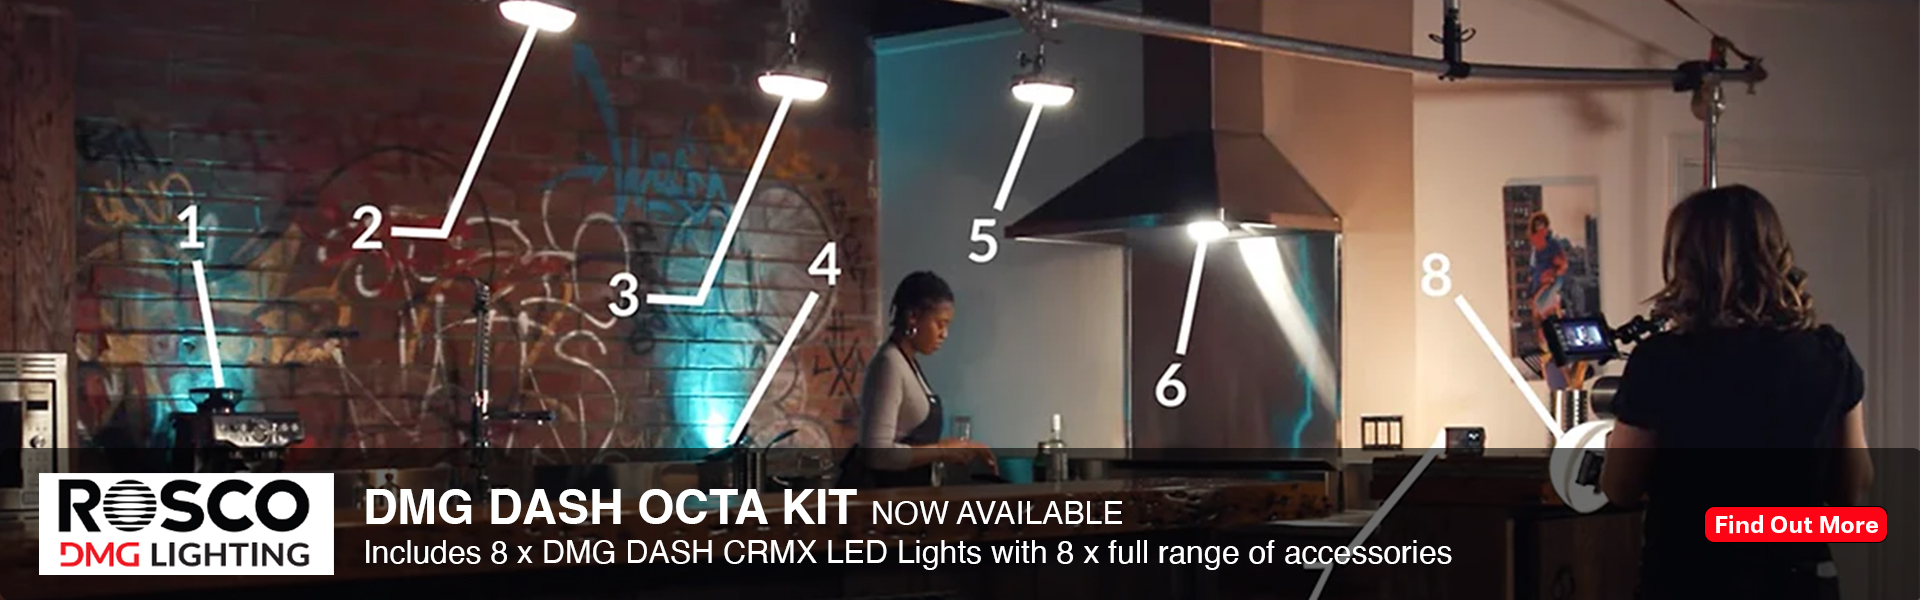 Rosco DMG DASH Pocket LED Lighting Kits available at www.mcl-media.co.uk